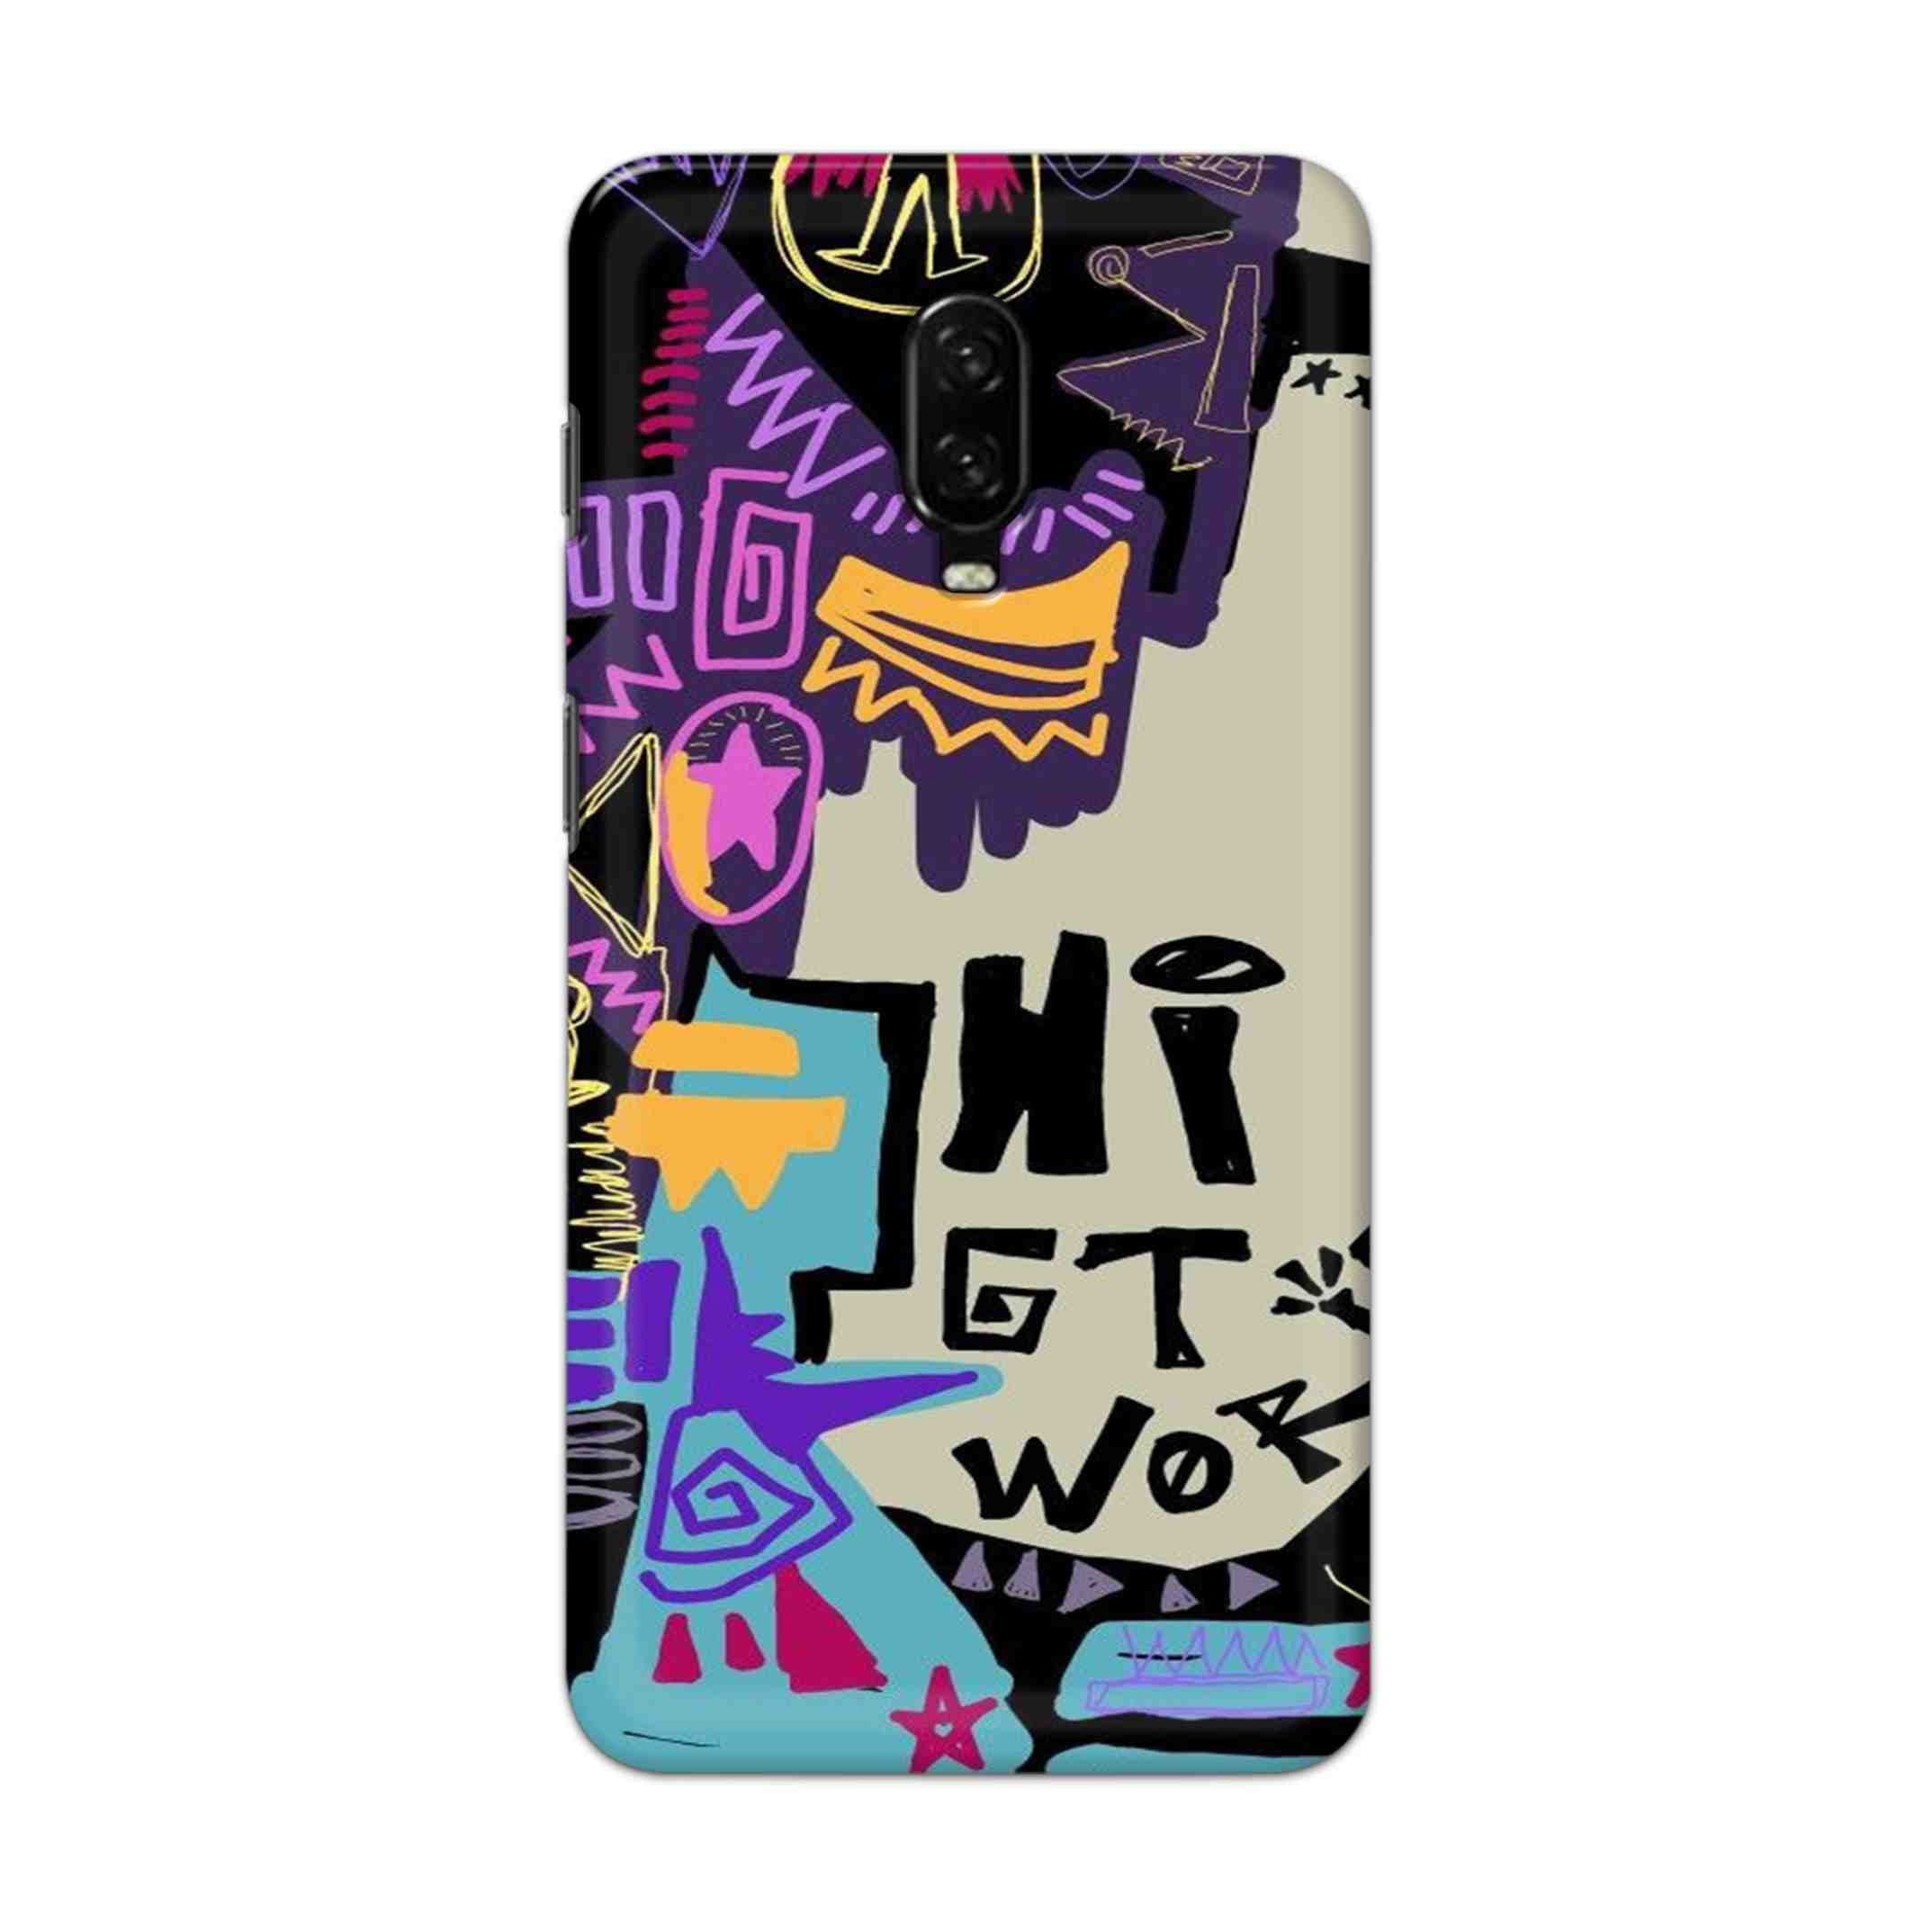 Buy Hi Gt World Hard Back Mobile Phone Case Cover For OnePlus 6T Online